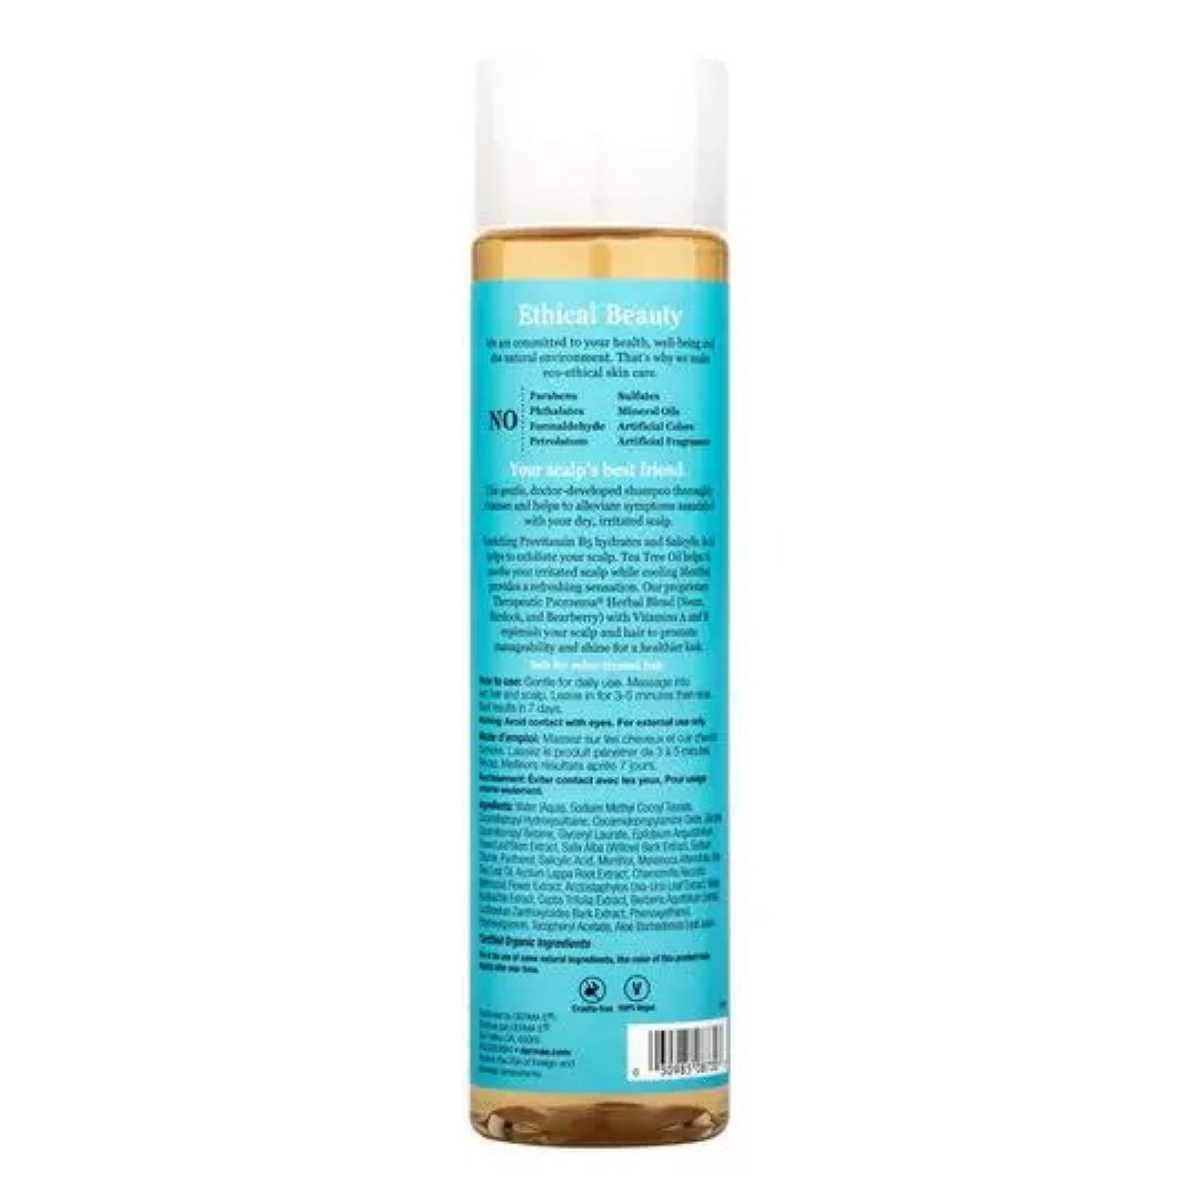 Derma E Scalp Relief Shampoo 296ml